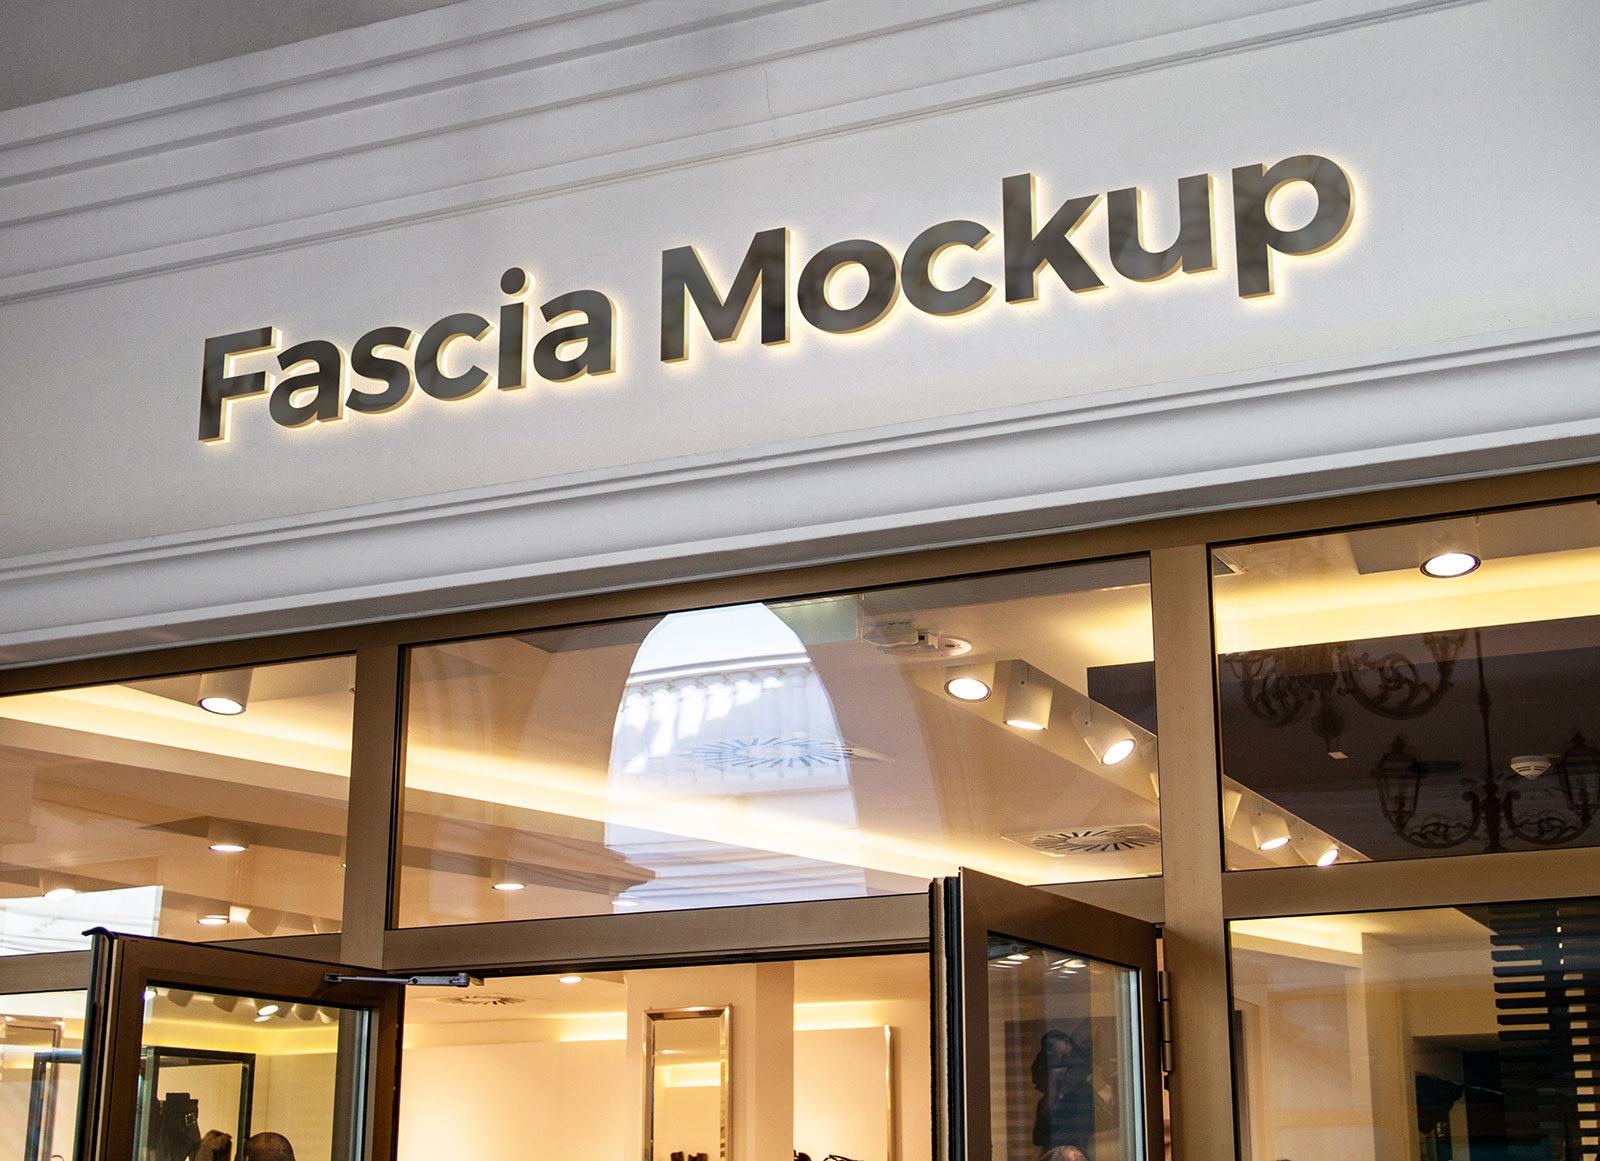 Nombre de la tienda Fascia retroiluminada del logotipo